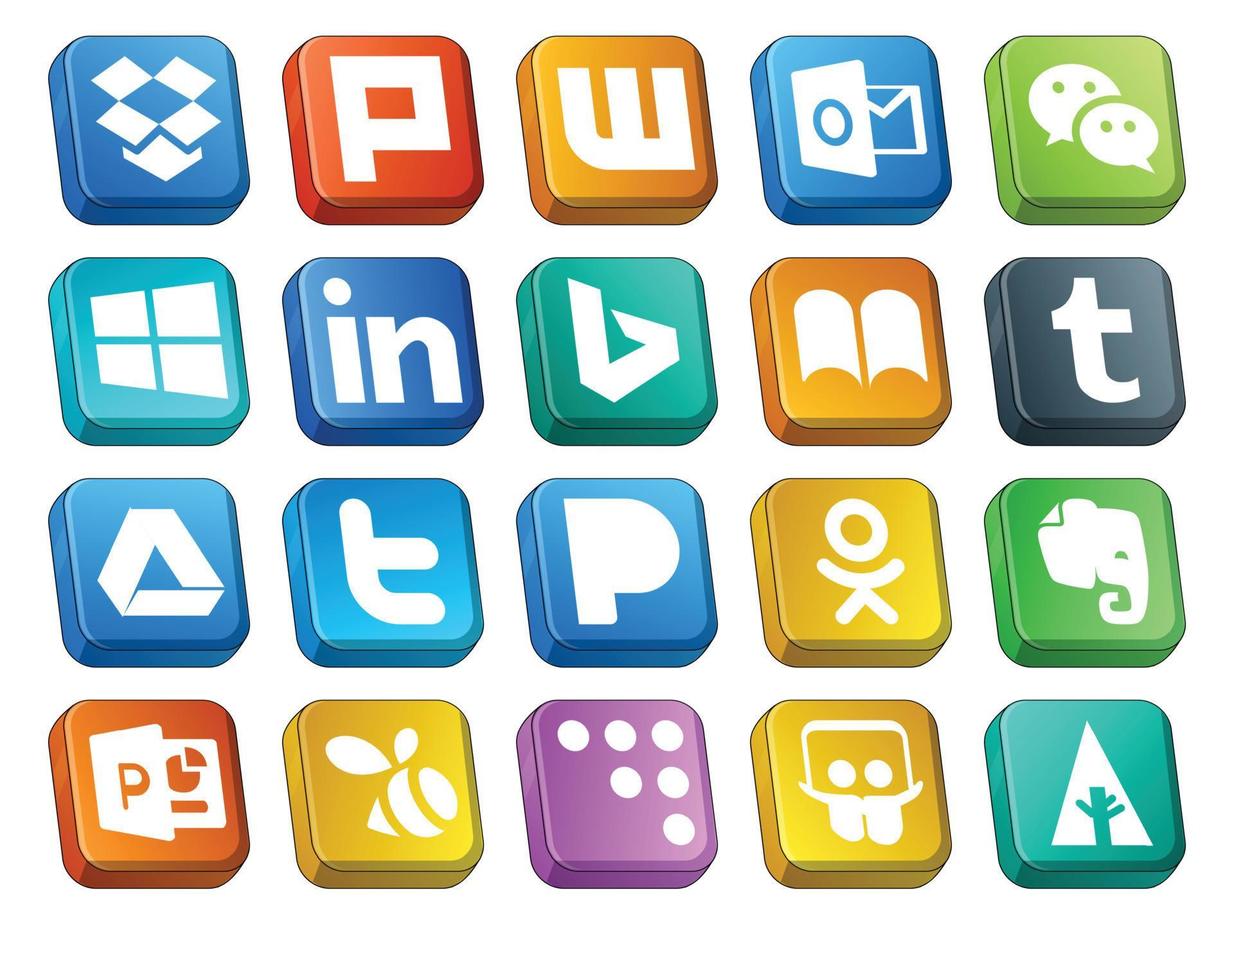 Paquete de 20 íconos de redes sociales que incluye powerpoint odnoklassniki bing pandora twitter vector